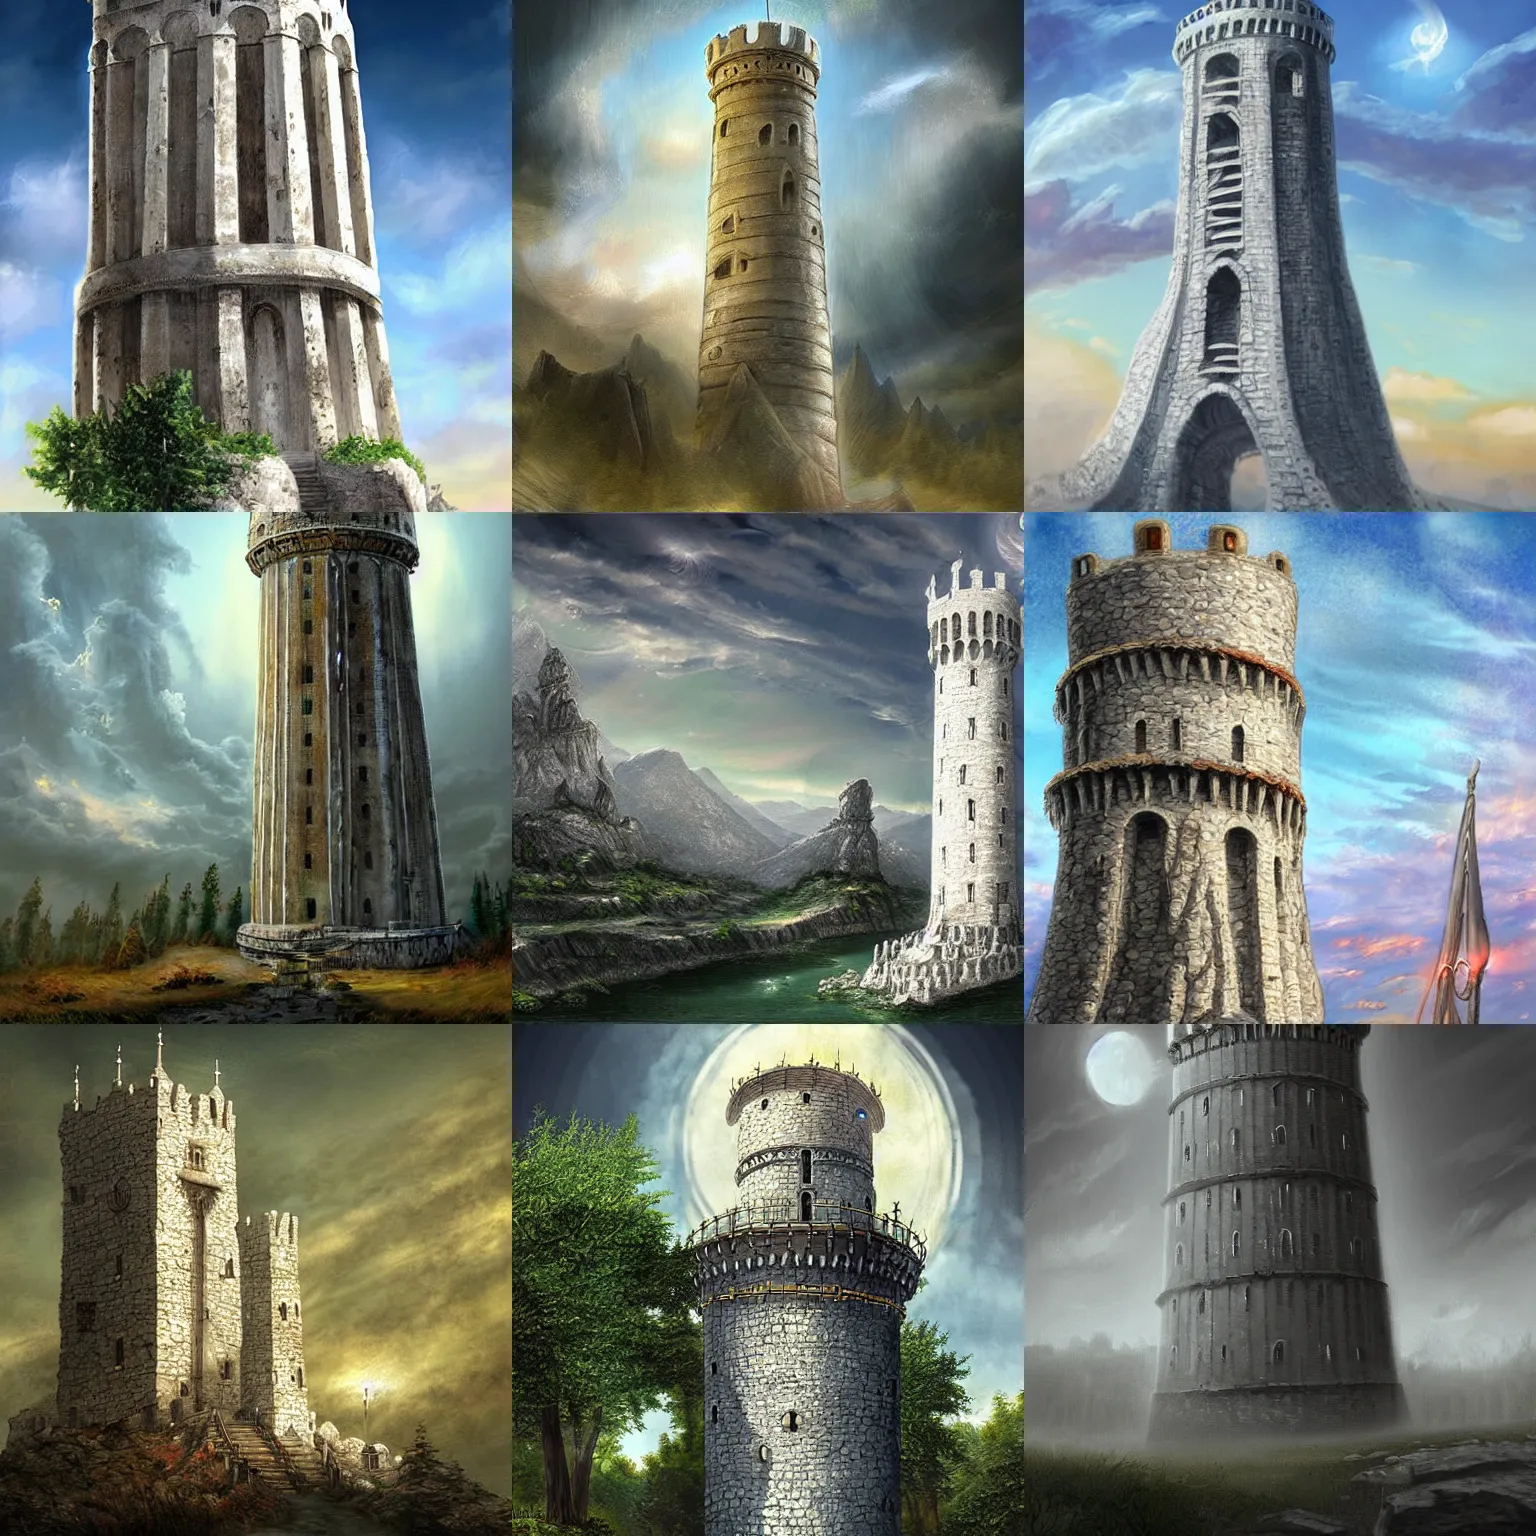 Prompt: Giant white tower, fantasy, digital art, HD, detailed.